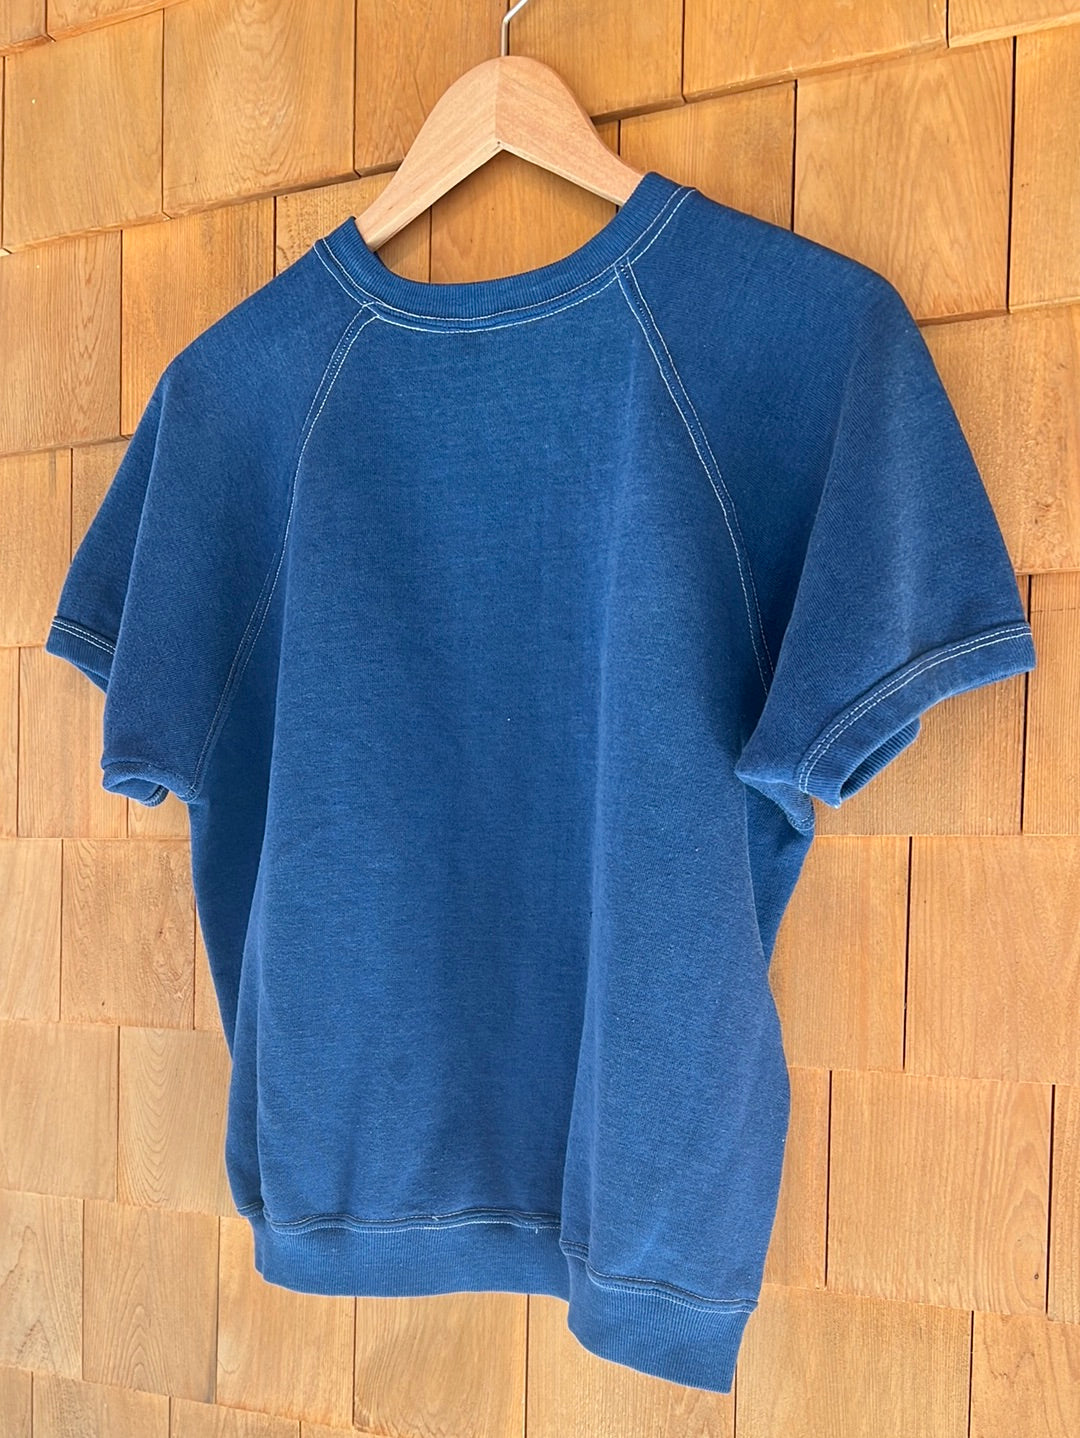 Vintage Warm Up Sweatshirt - Navy Blue